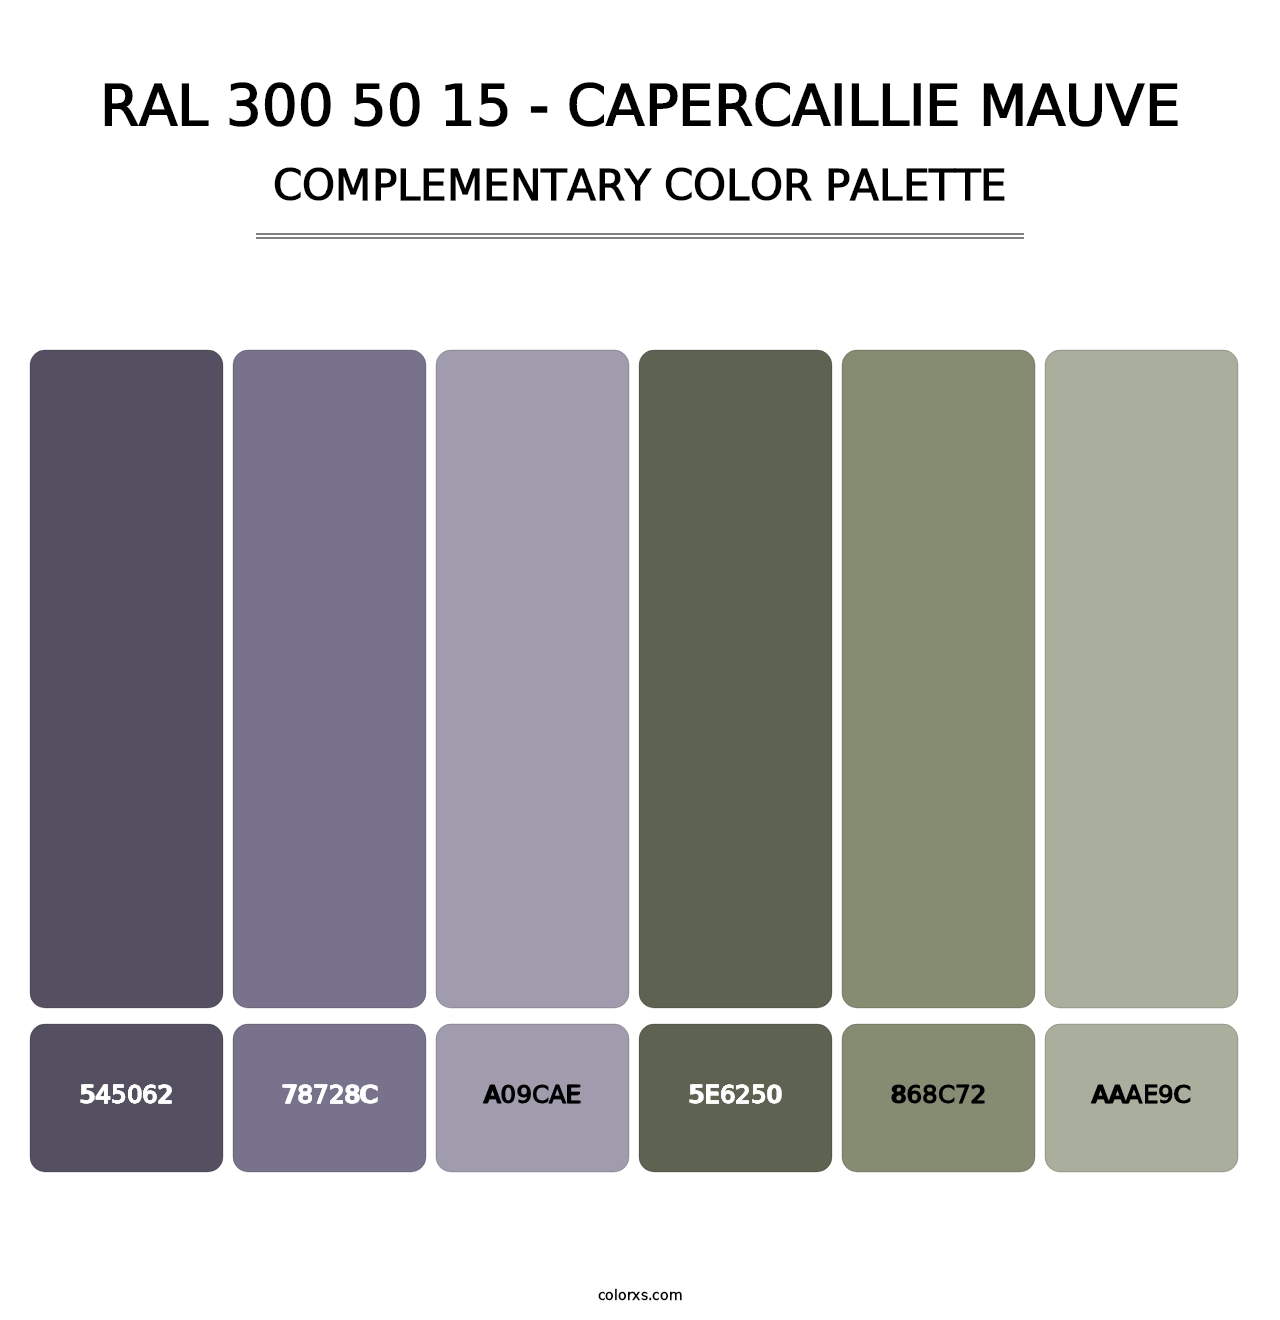 RAL 300 50 15 - Capercaillie Mauve - Complementary Color Palette